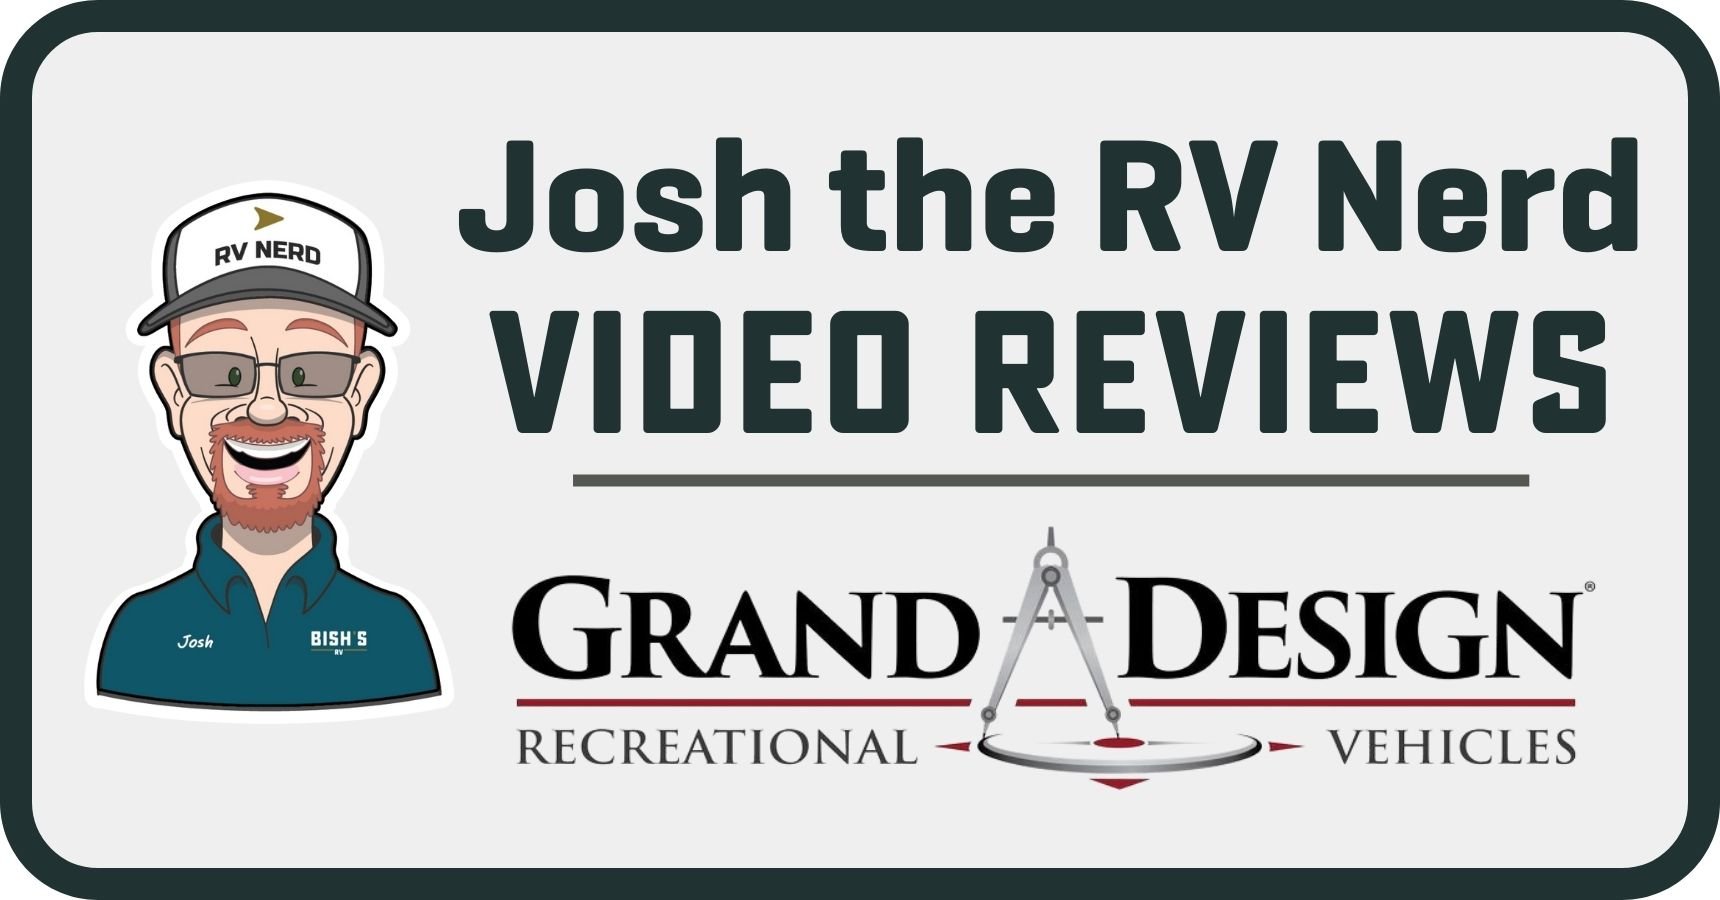 See Josh the RV Nerd Video Reviews